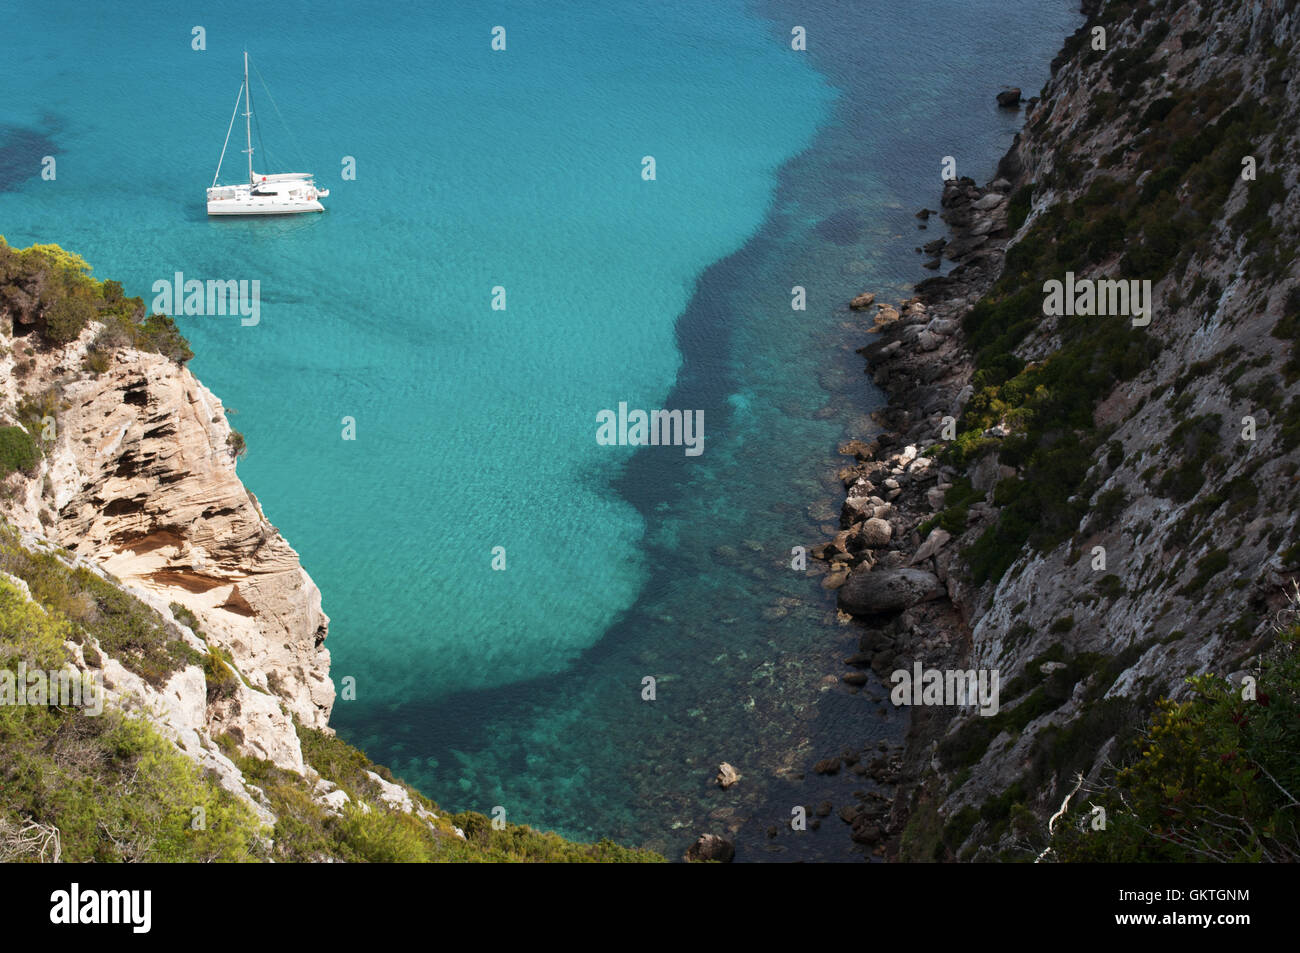 Formentera, Balearic Island: view of the Mediterranean maquis and a catamaran in the Mediterranean Sea Stock Photo